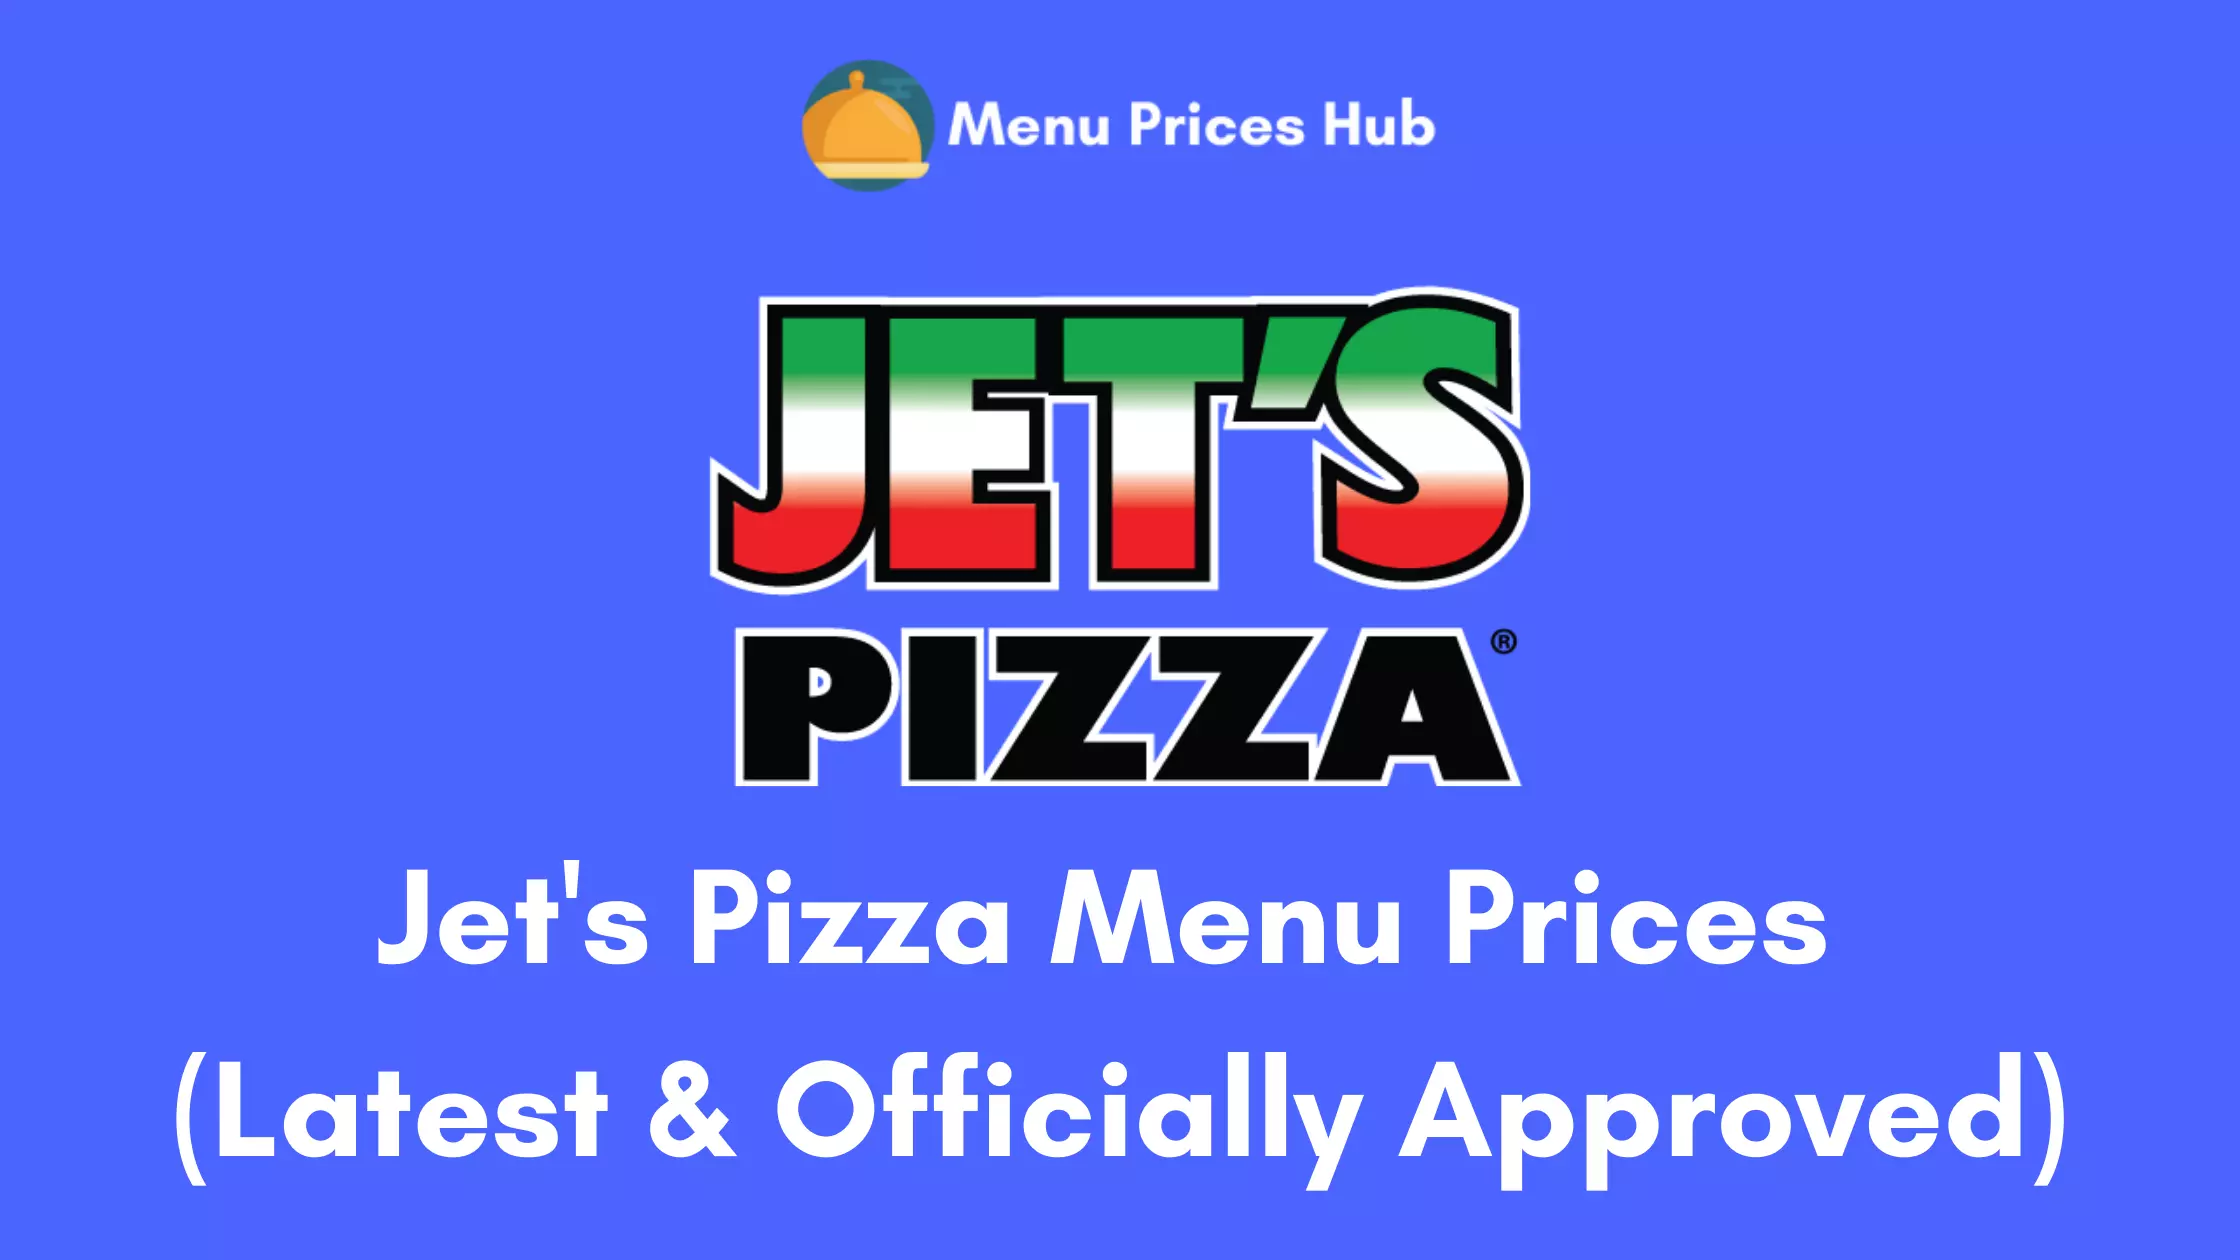 Jet's Pizza menu prices